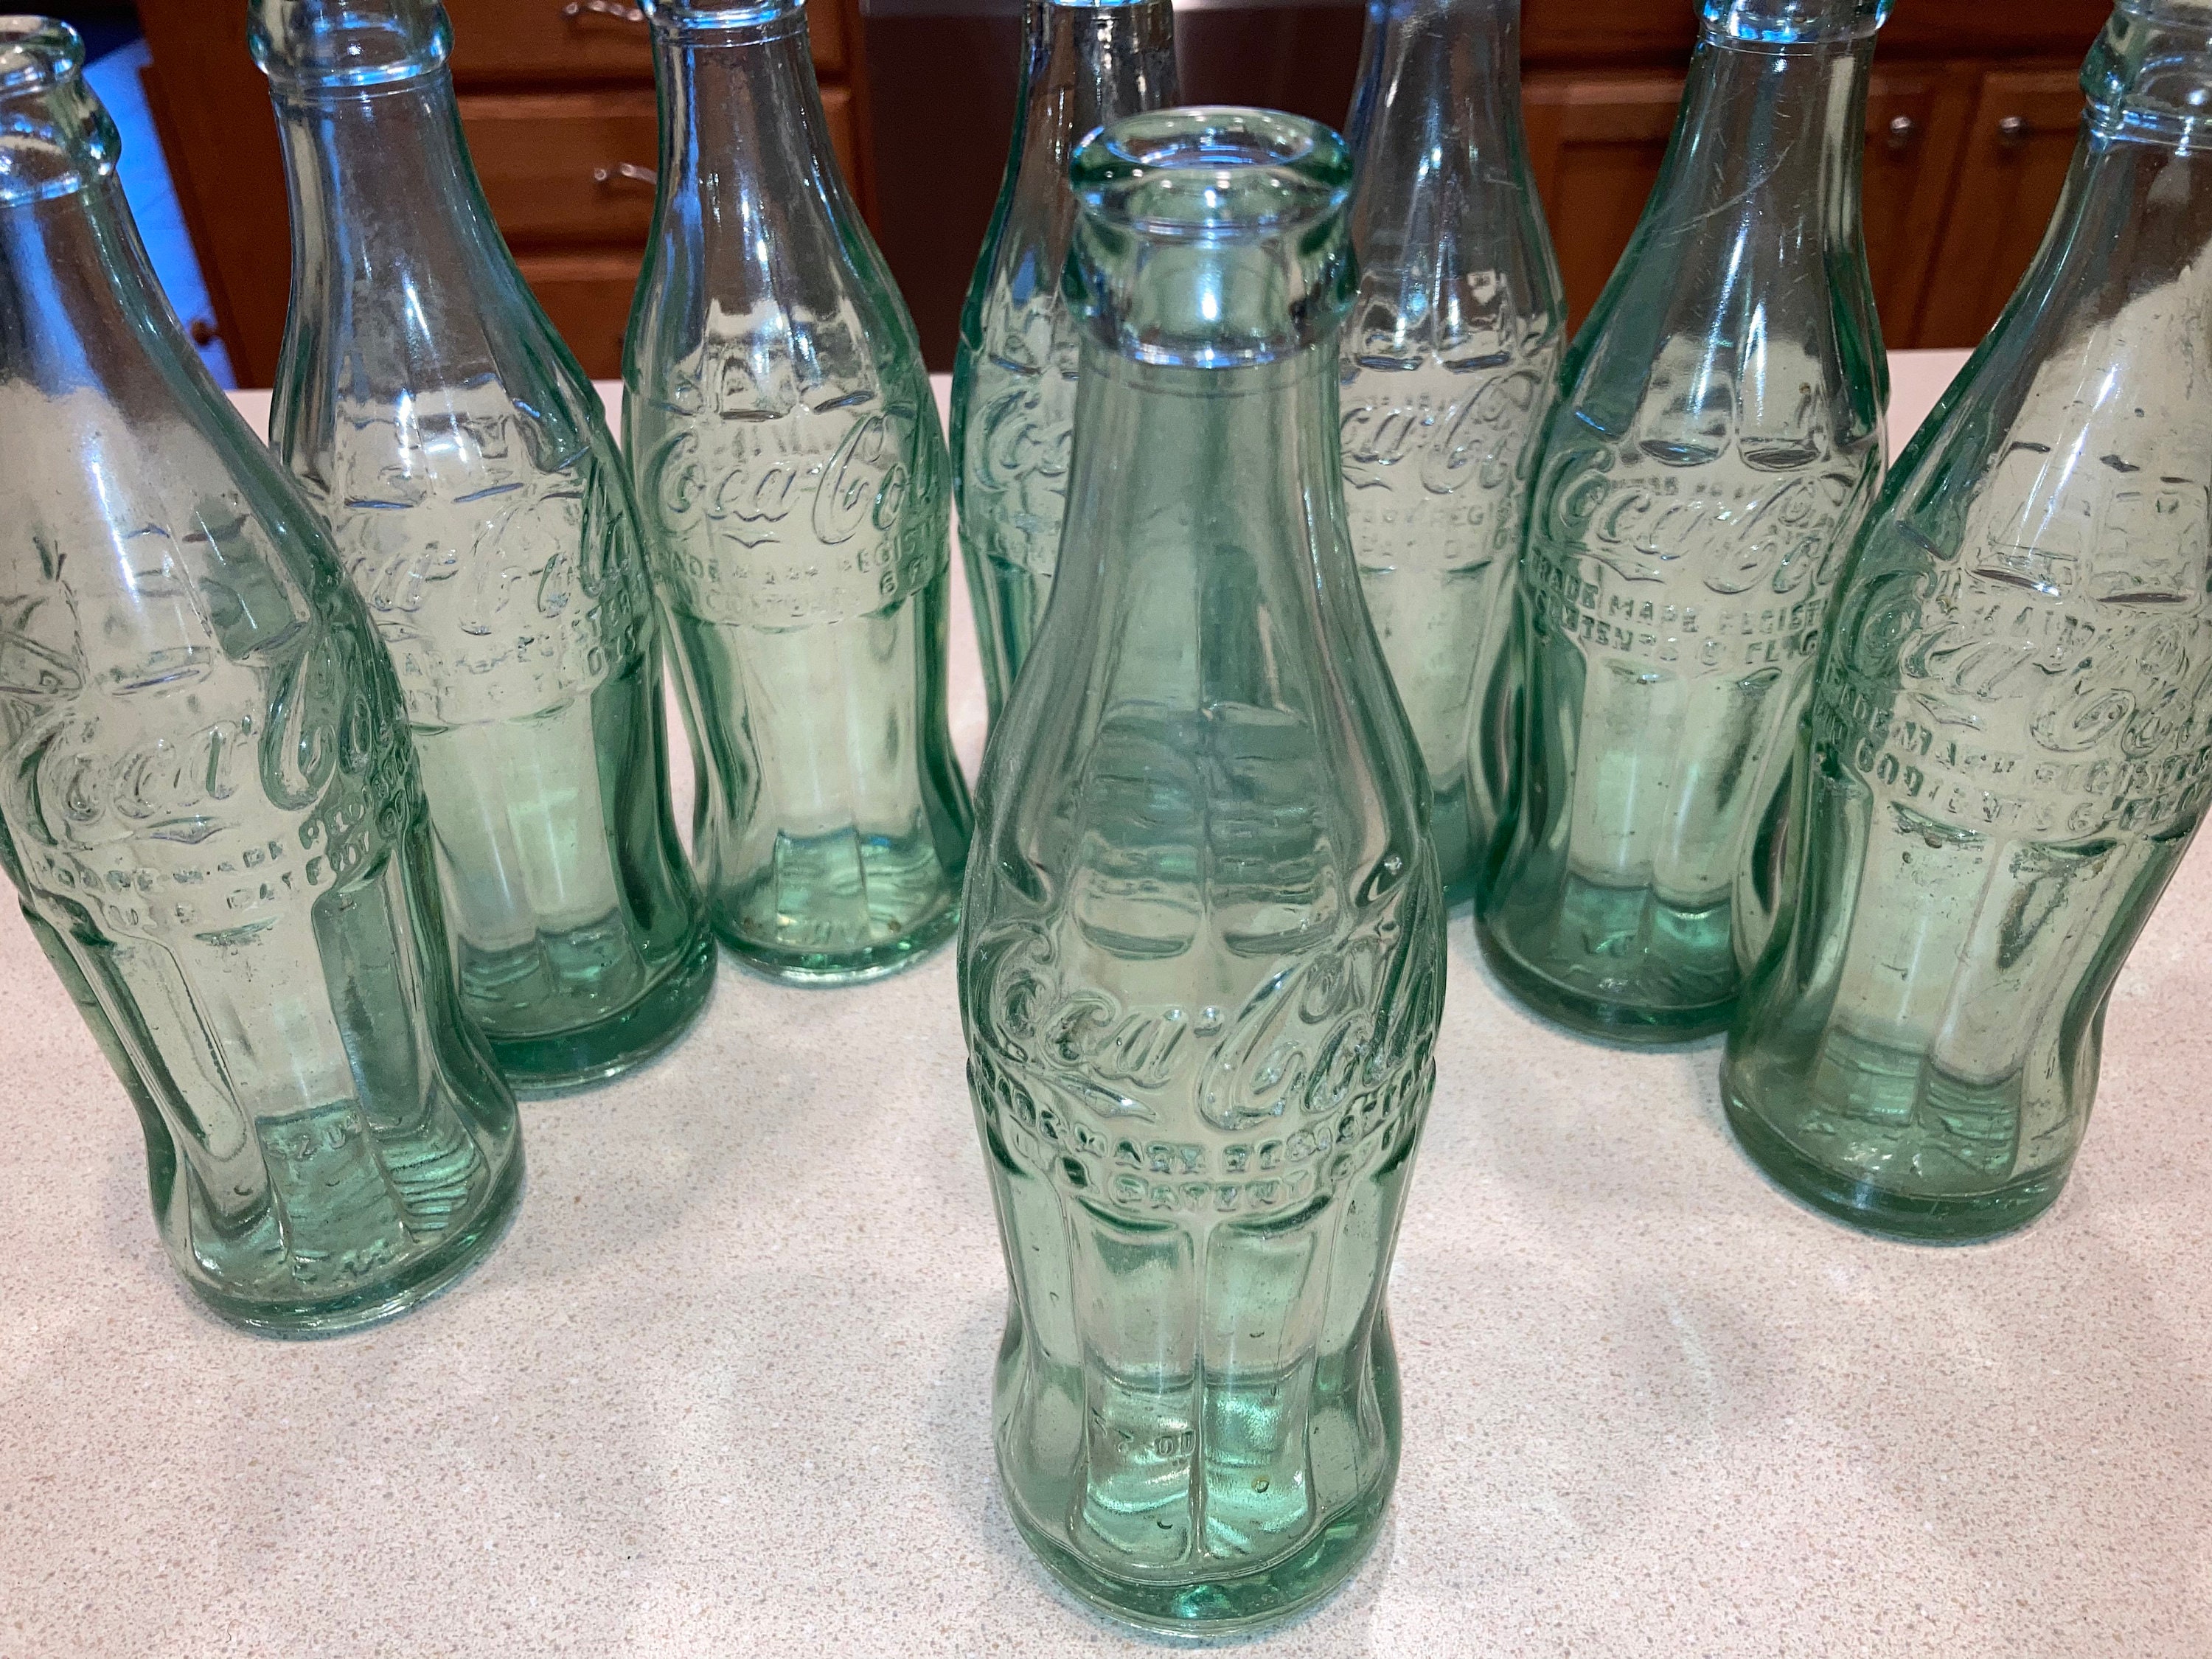 1970s Glass 1 Liter Coke Bottles  Coke bottle, Coca cola, Coca cola bottle